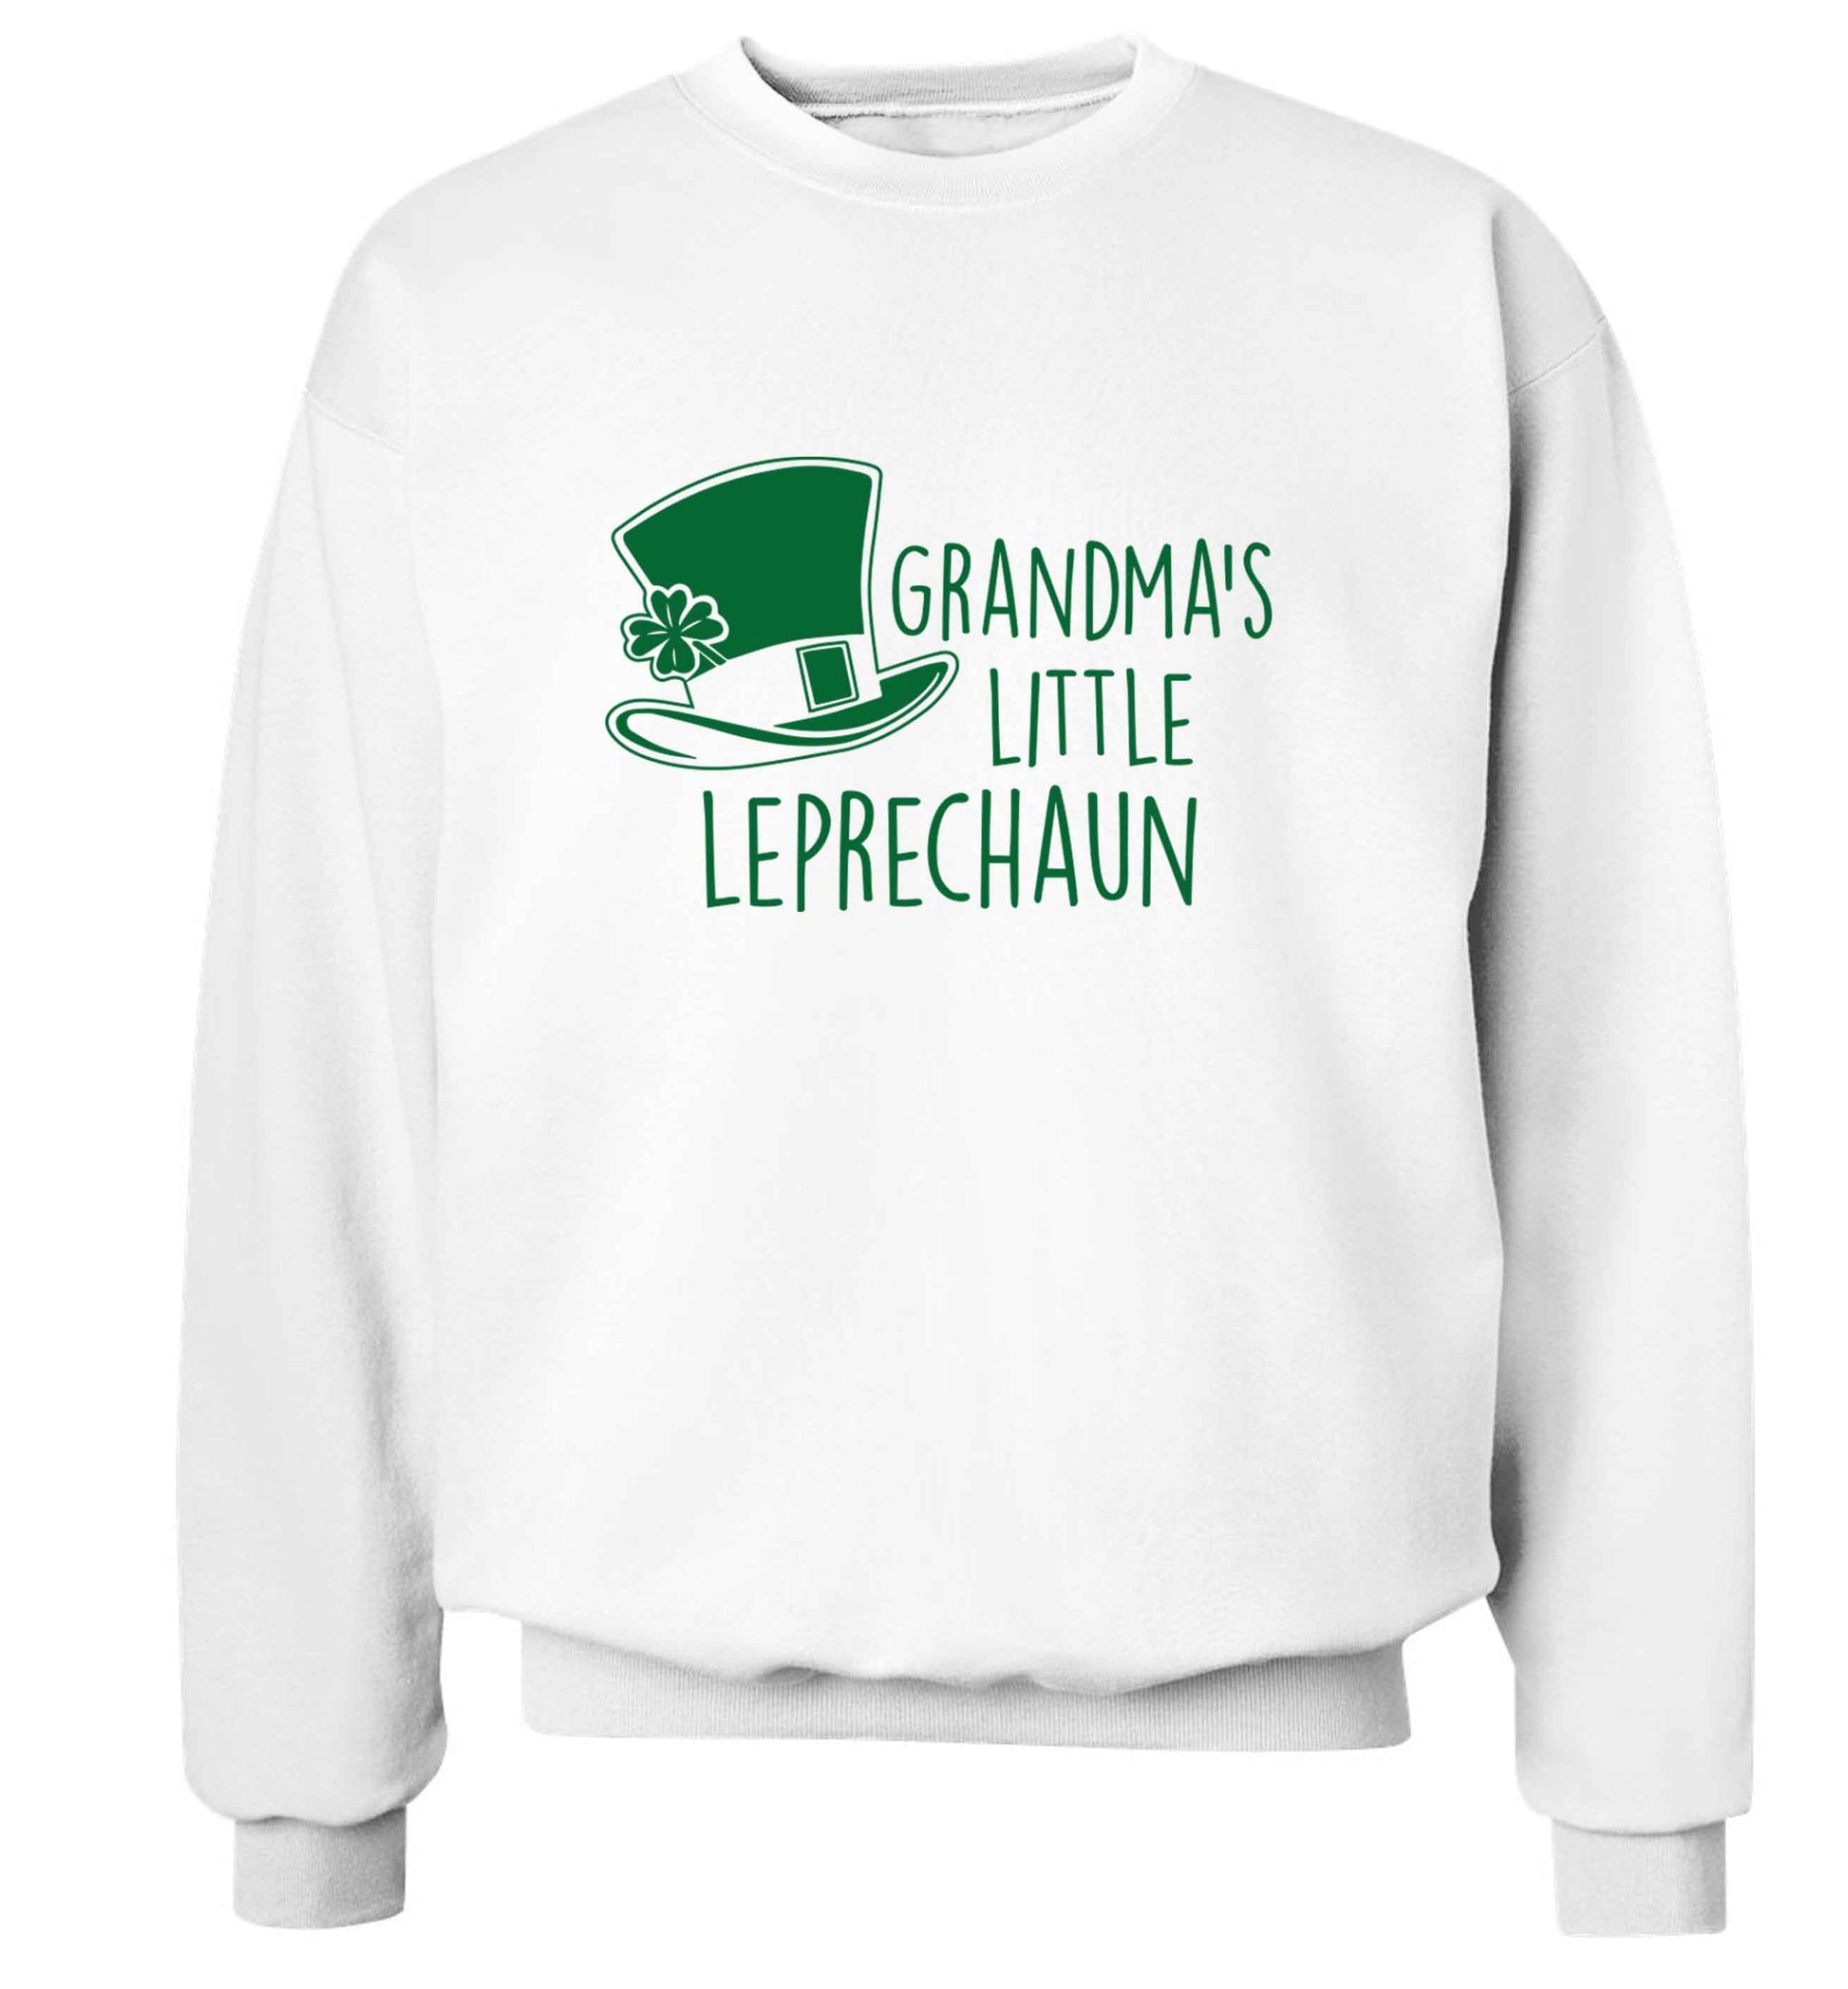 Grandma's little leprechaun adult's unisex white sweater 2XL